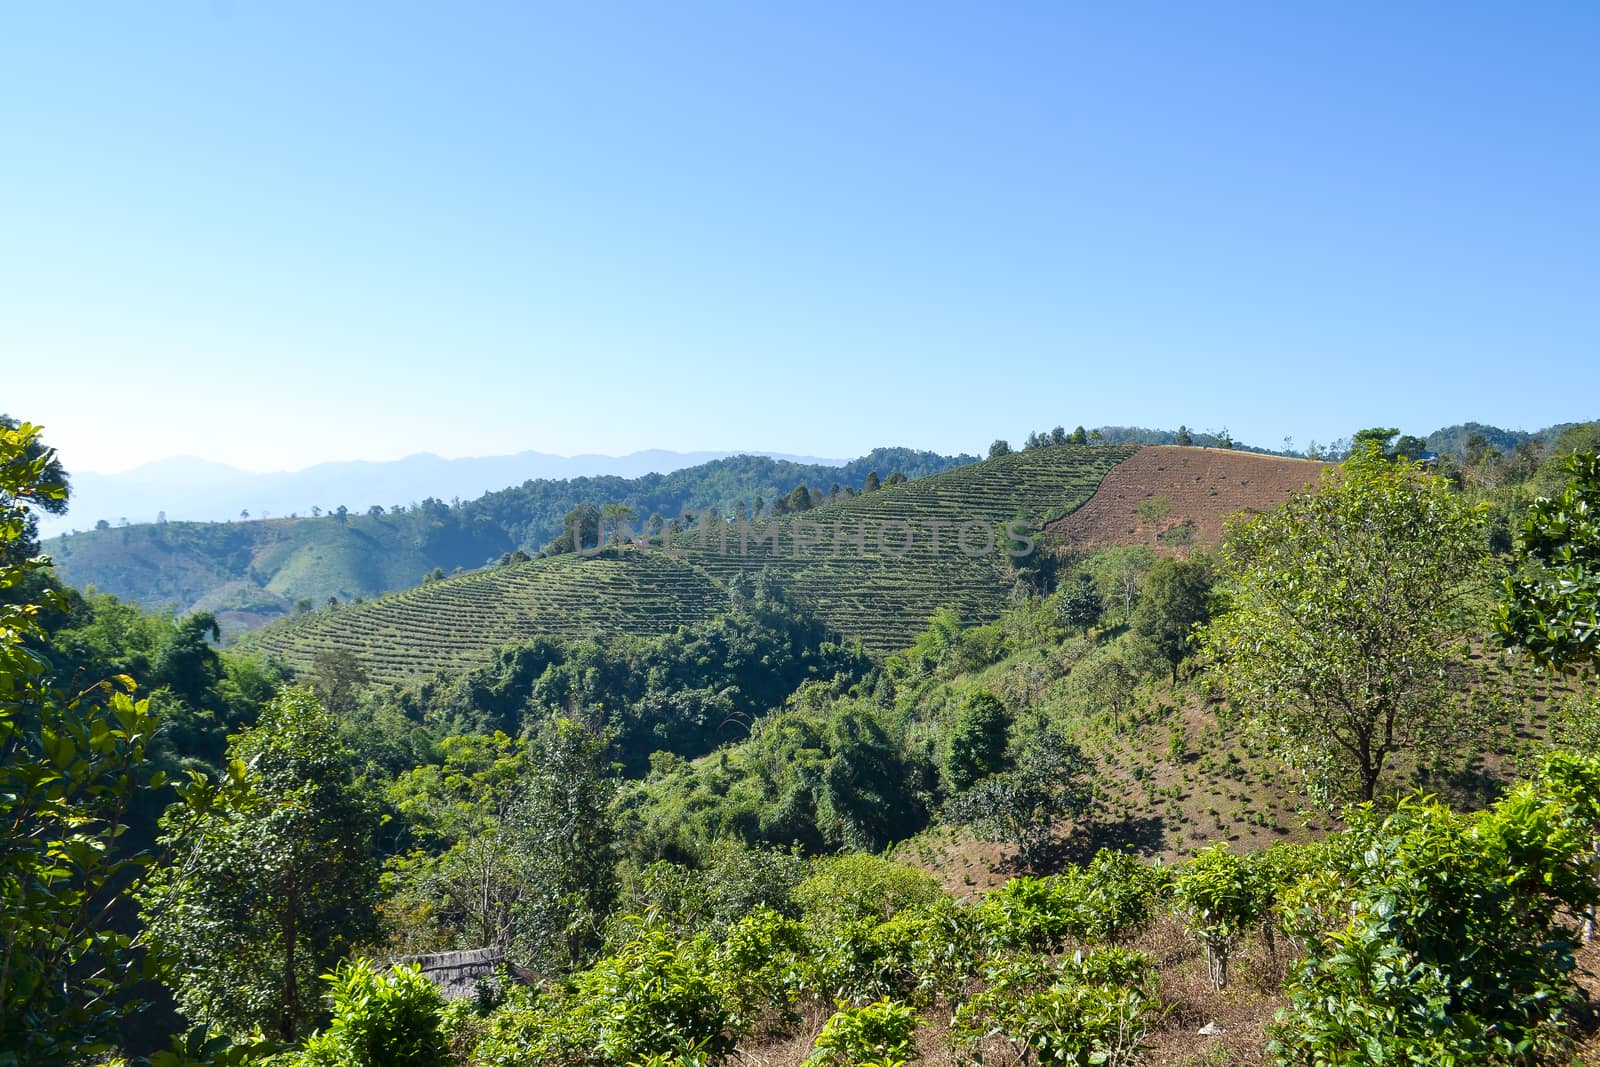 Tea Plantation planted on mountain by apichart